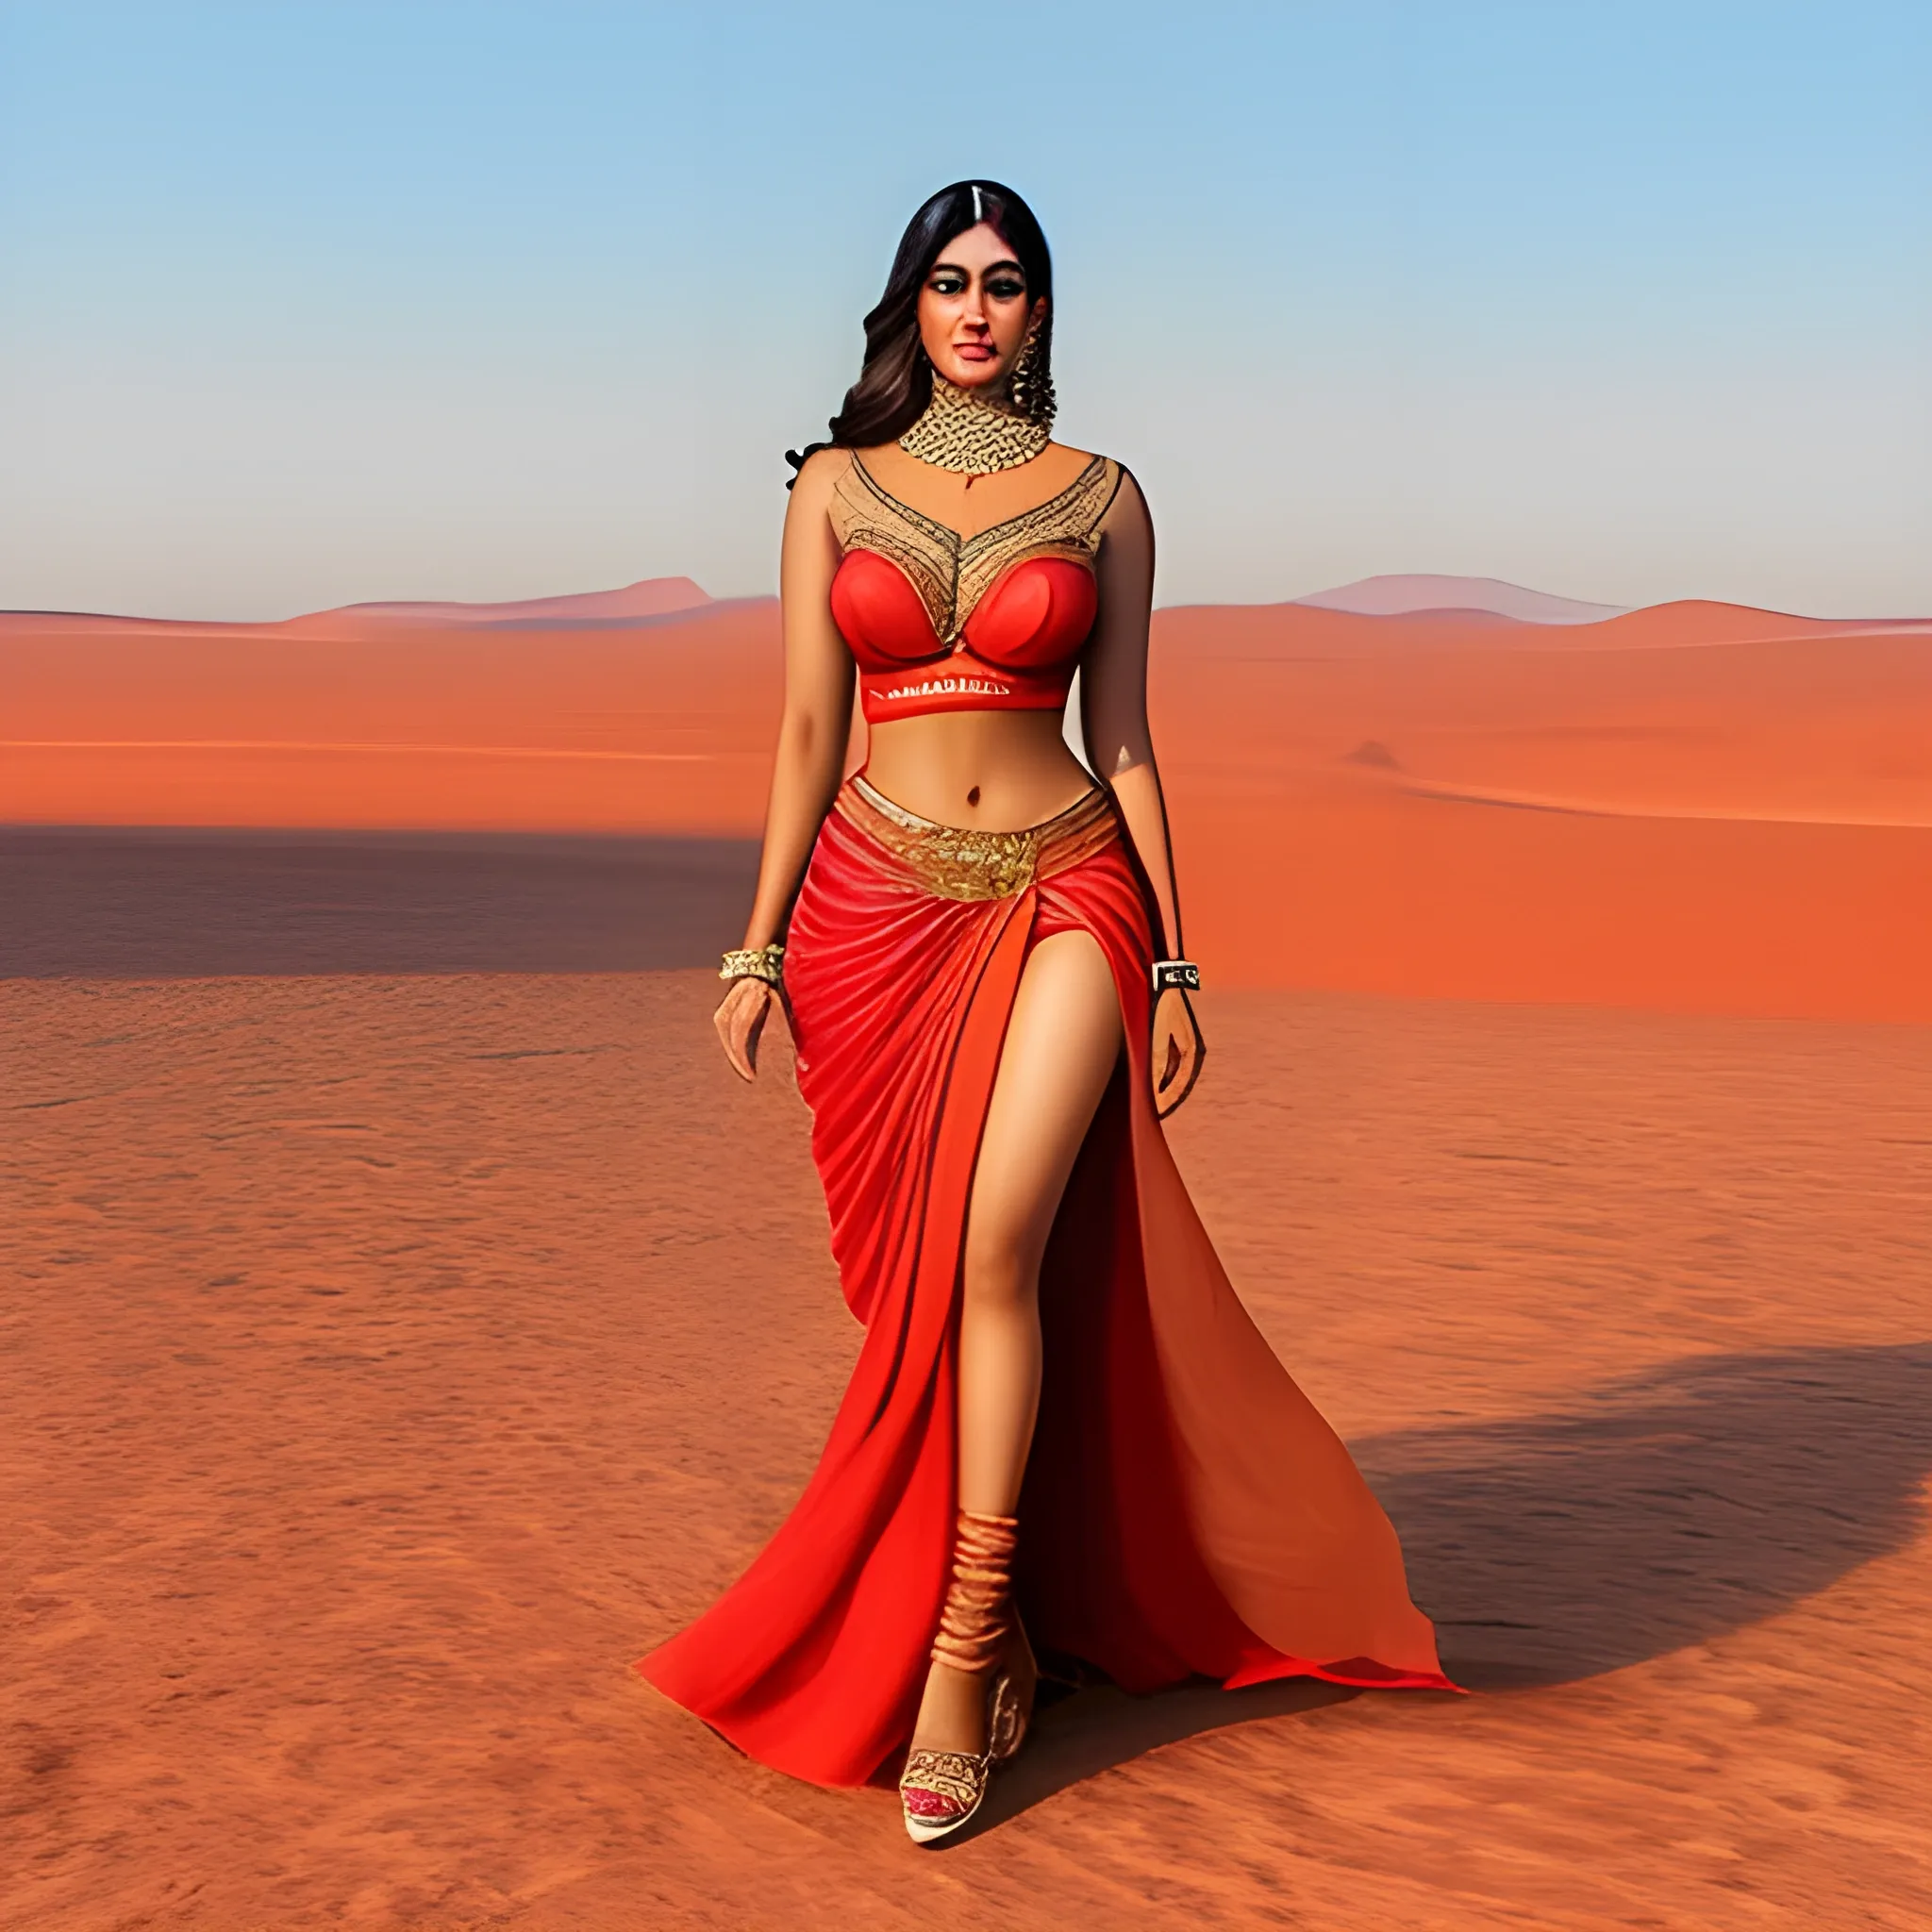 beautiful girl wearing masala Gupta in the middle of the desert

realistic